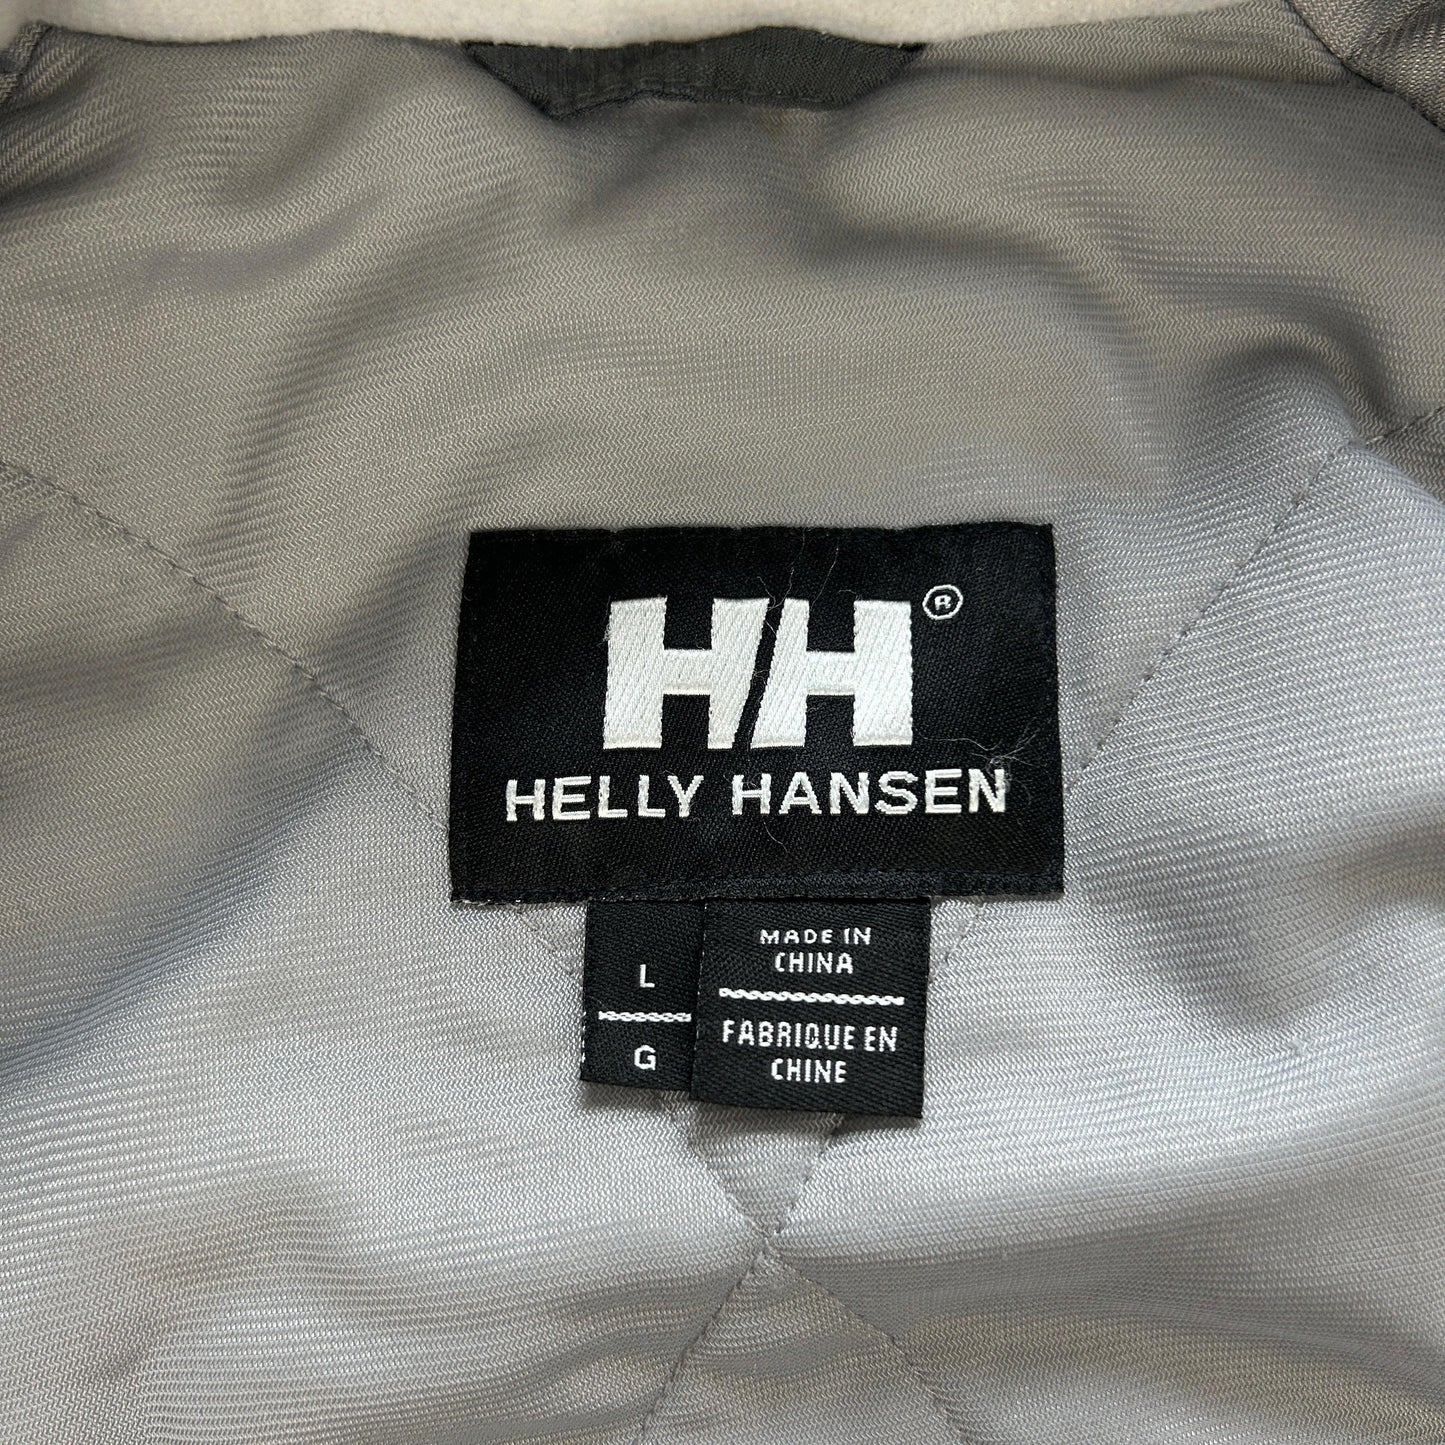 Vintage Helly Hansen Jacket Size L - Known Source